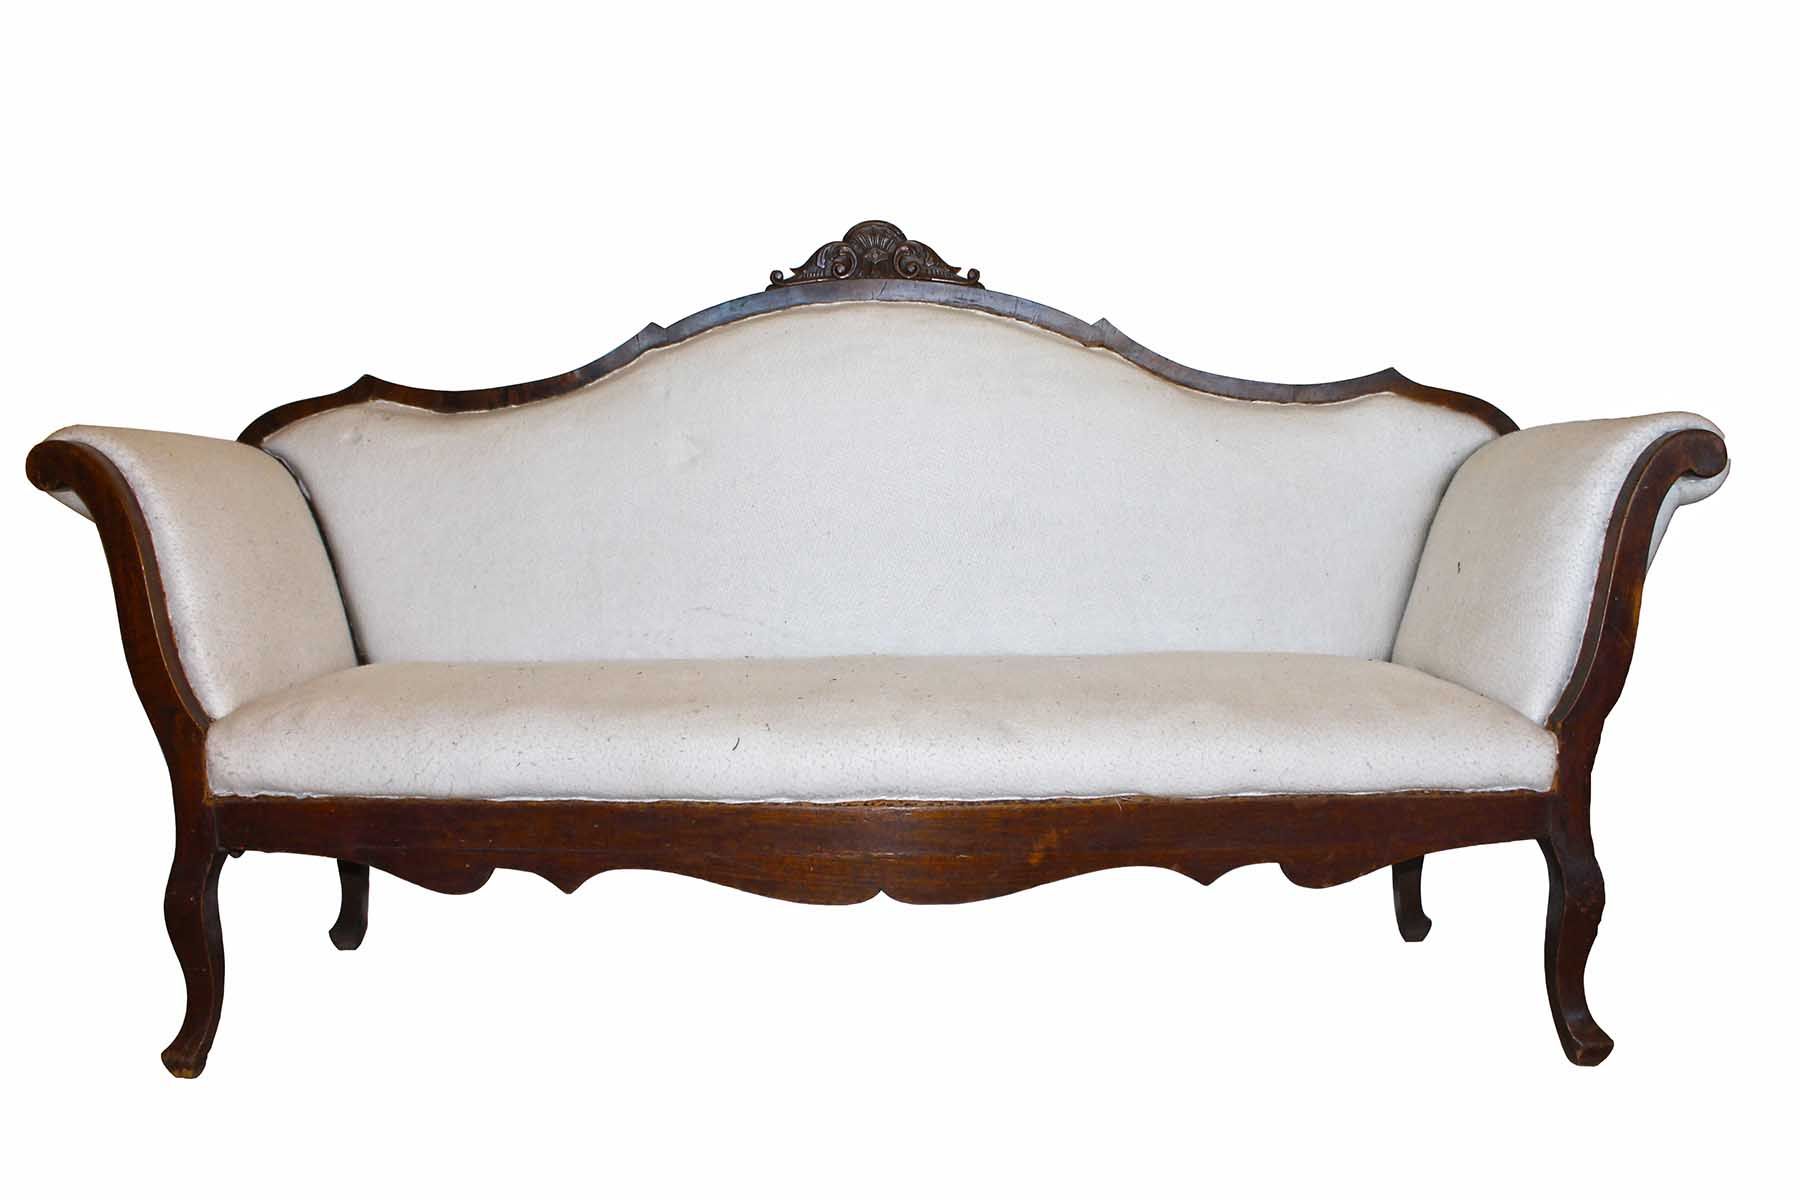 Null 路易-菲利普沙发

19世纪中期

胡桃木雕刻，以对立的卷轴为中心的形状的背部，扇形的扶手，软垫的背部，波浪形的腿，没有软垫，轻微缺陷

220x50&hellip;